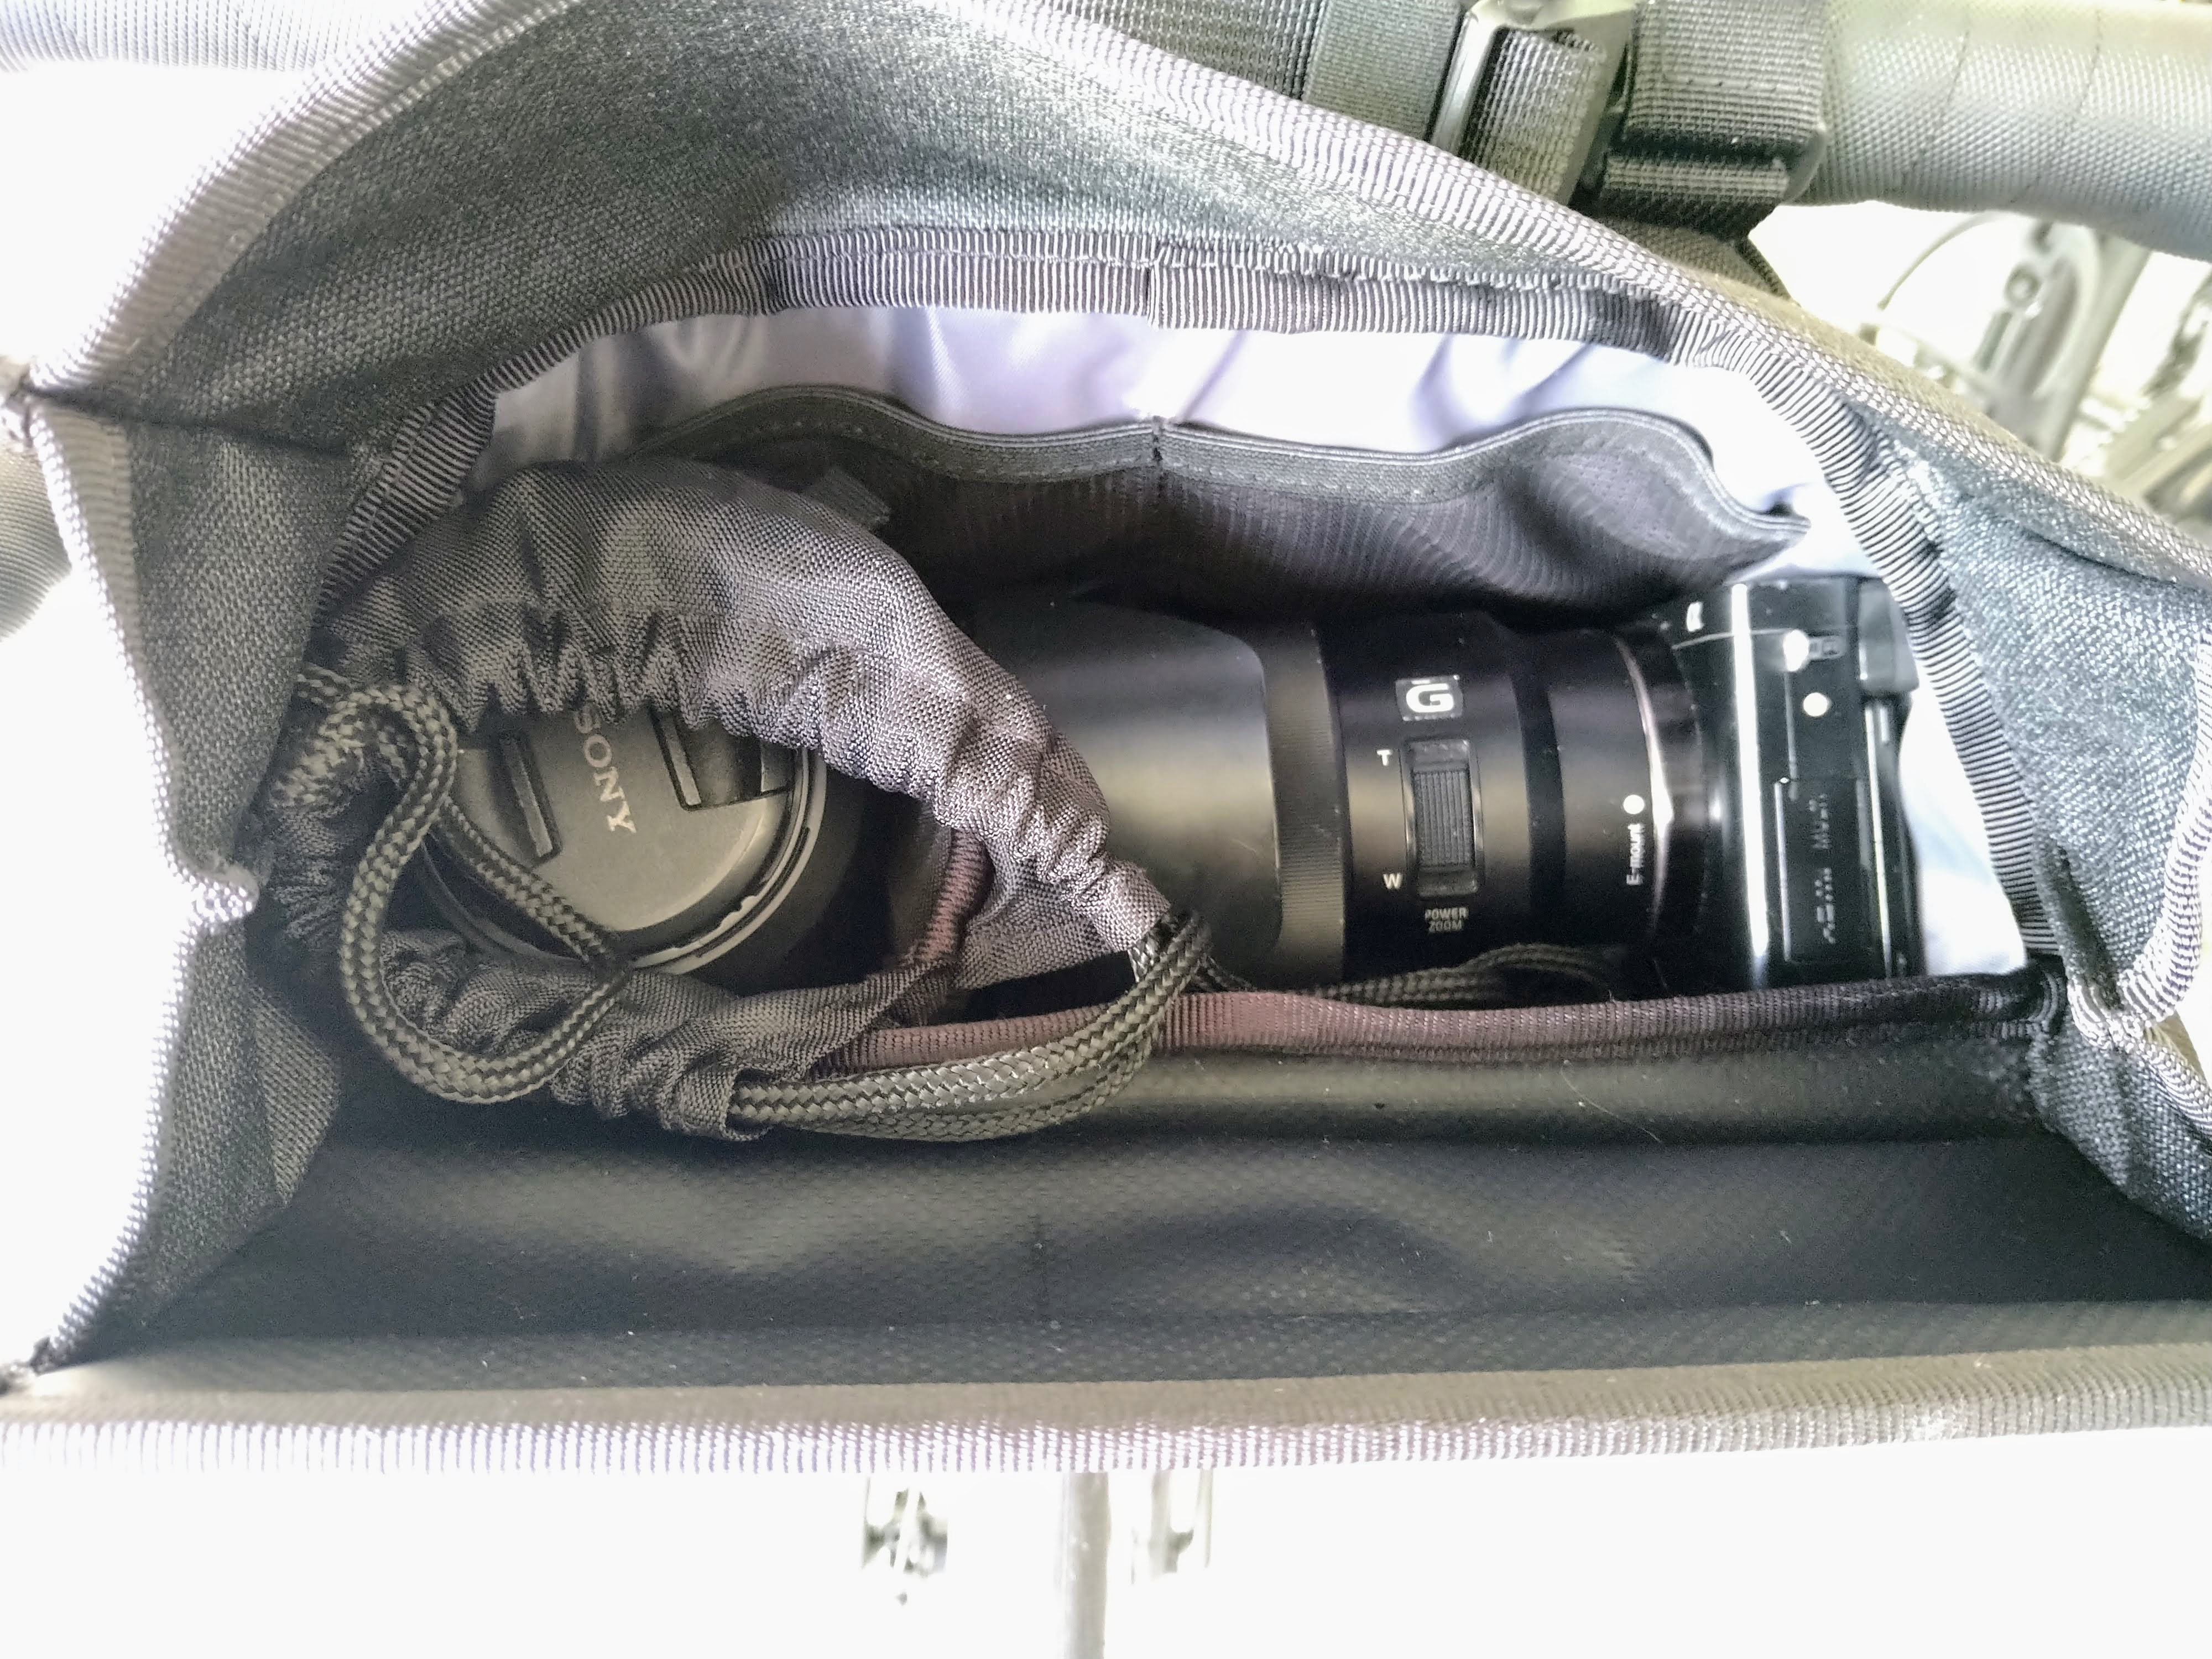 Handlebar bag with cameras inside